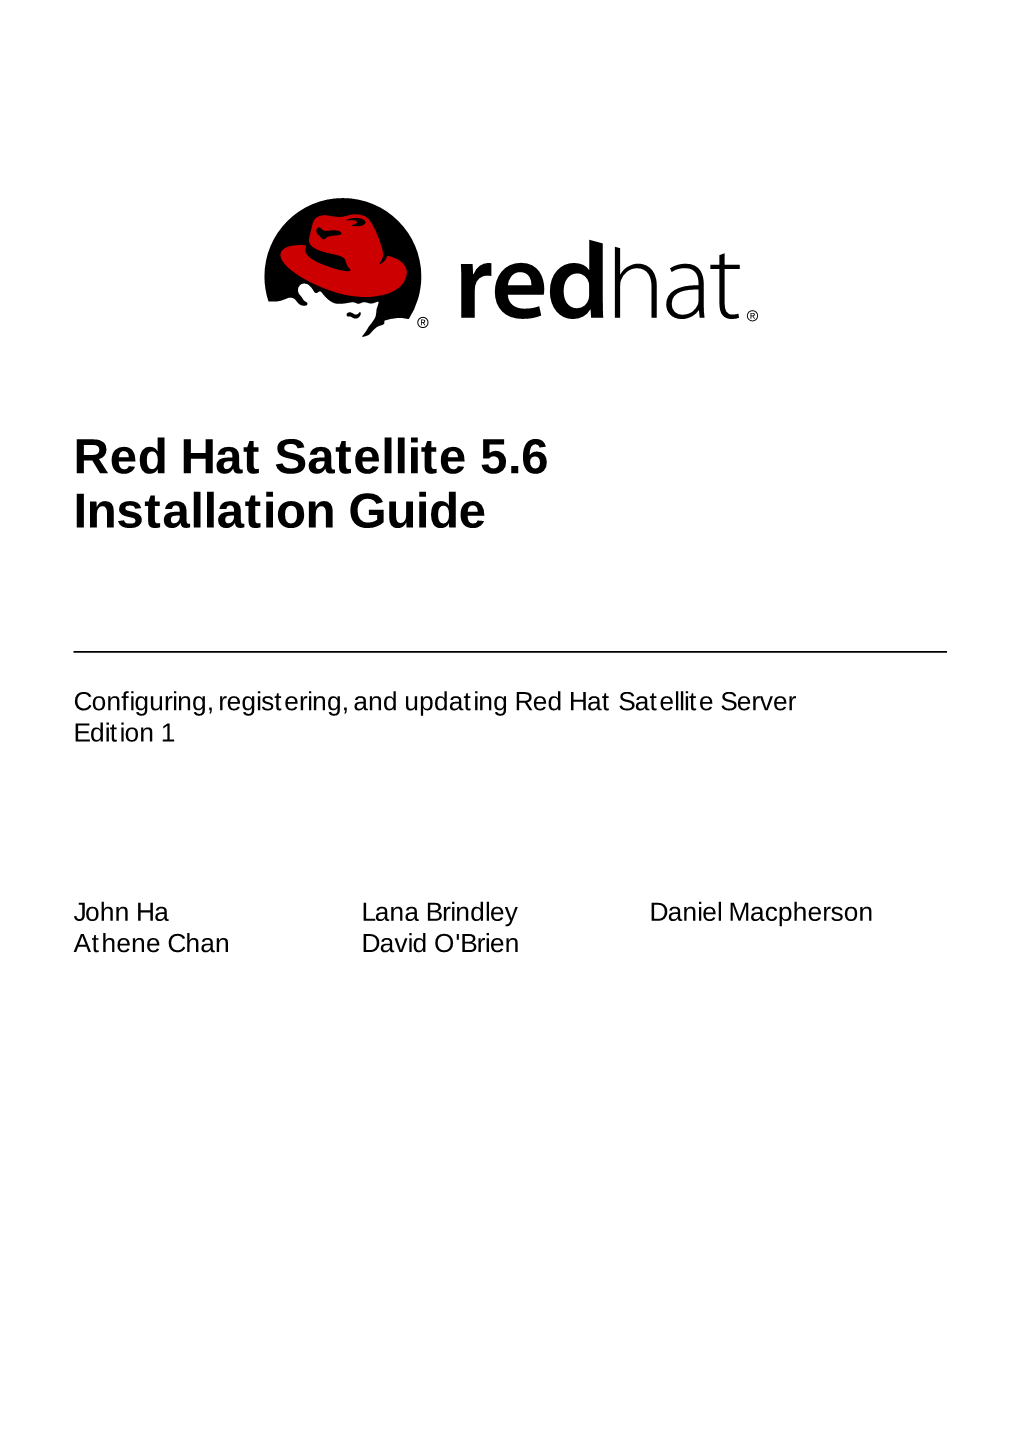 Red Hat Satellite 5.6 Installation Guide